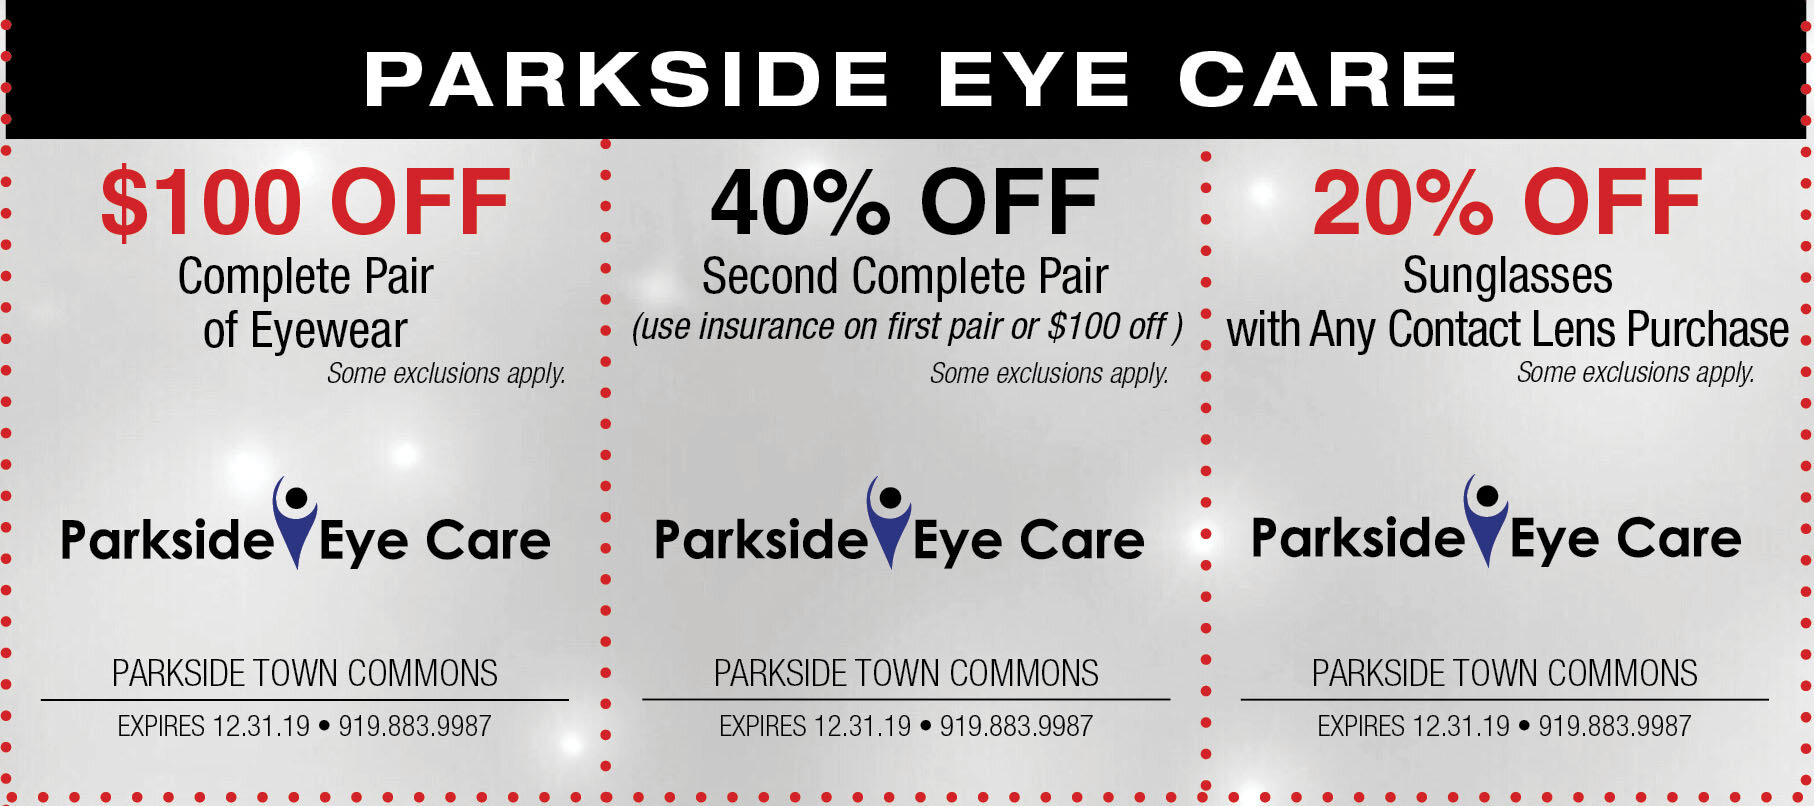 PTC Parkside Eye Care.jpg